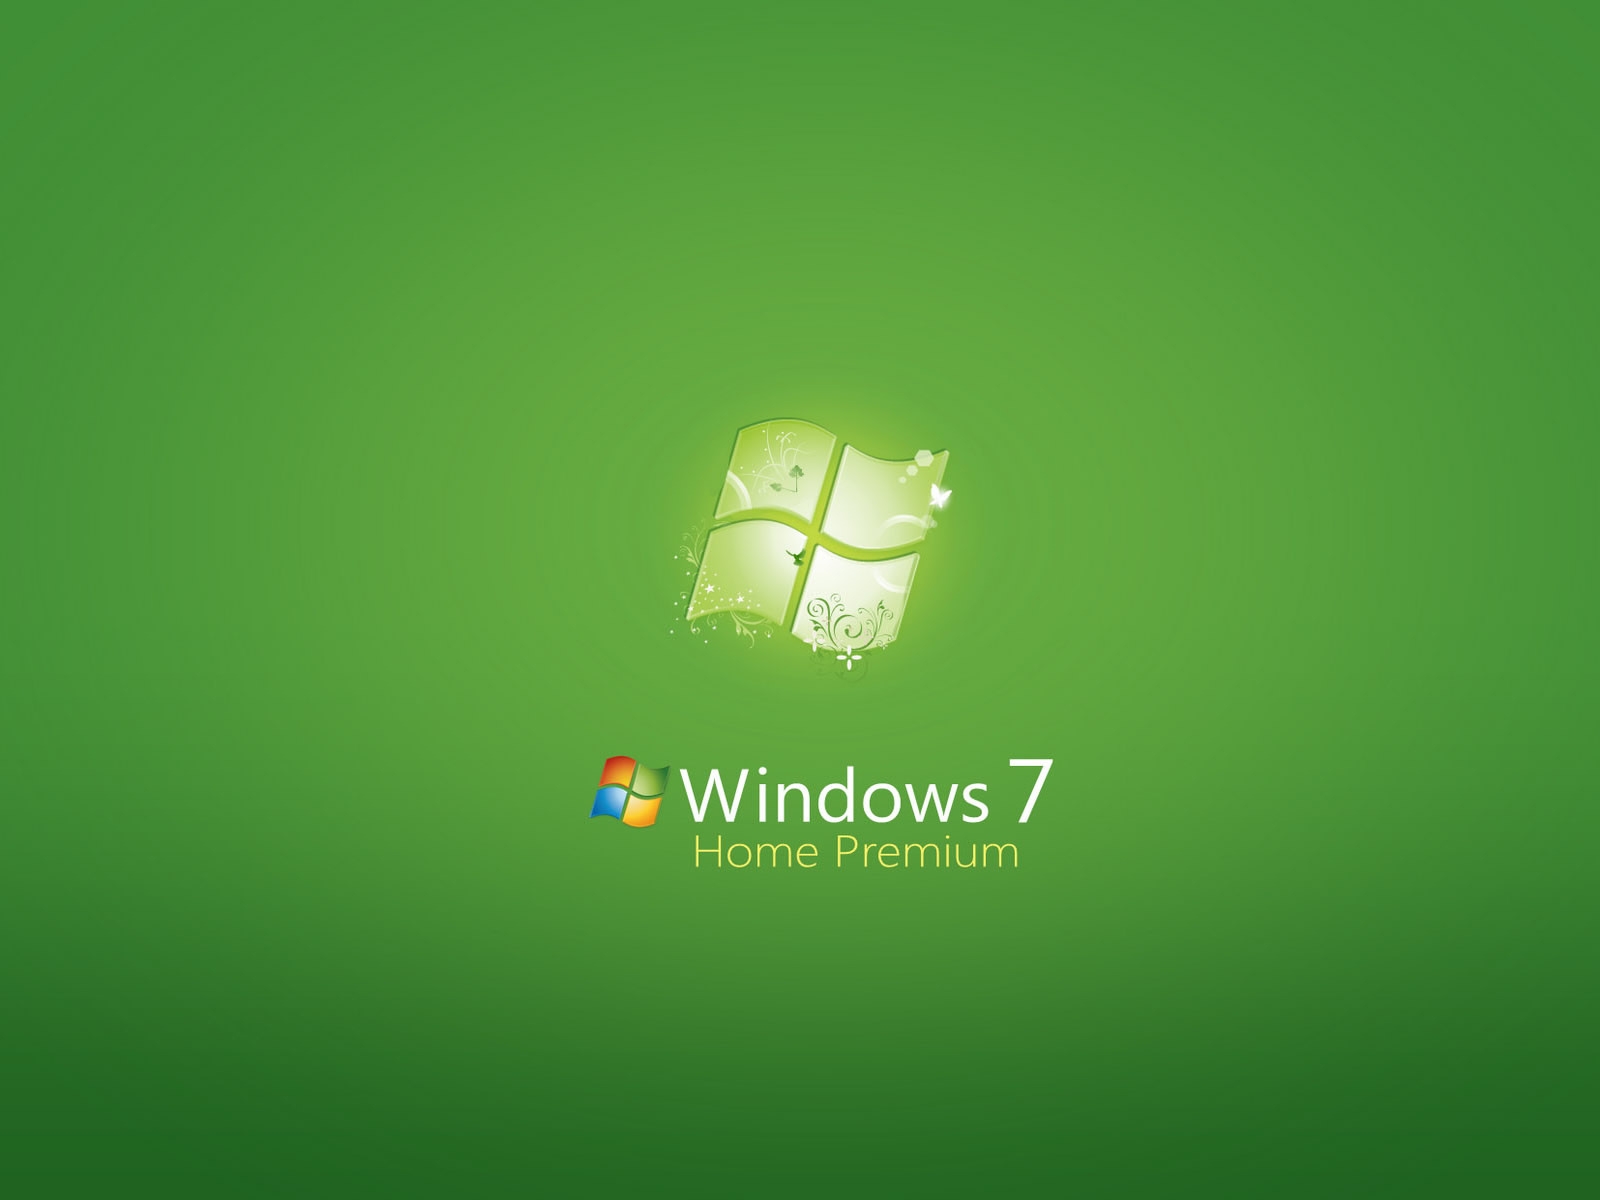 Windows 7 Home Premium Green for 1600 x 1200 resolution